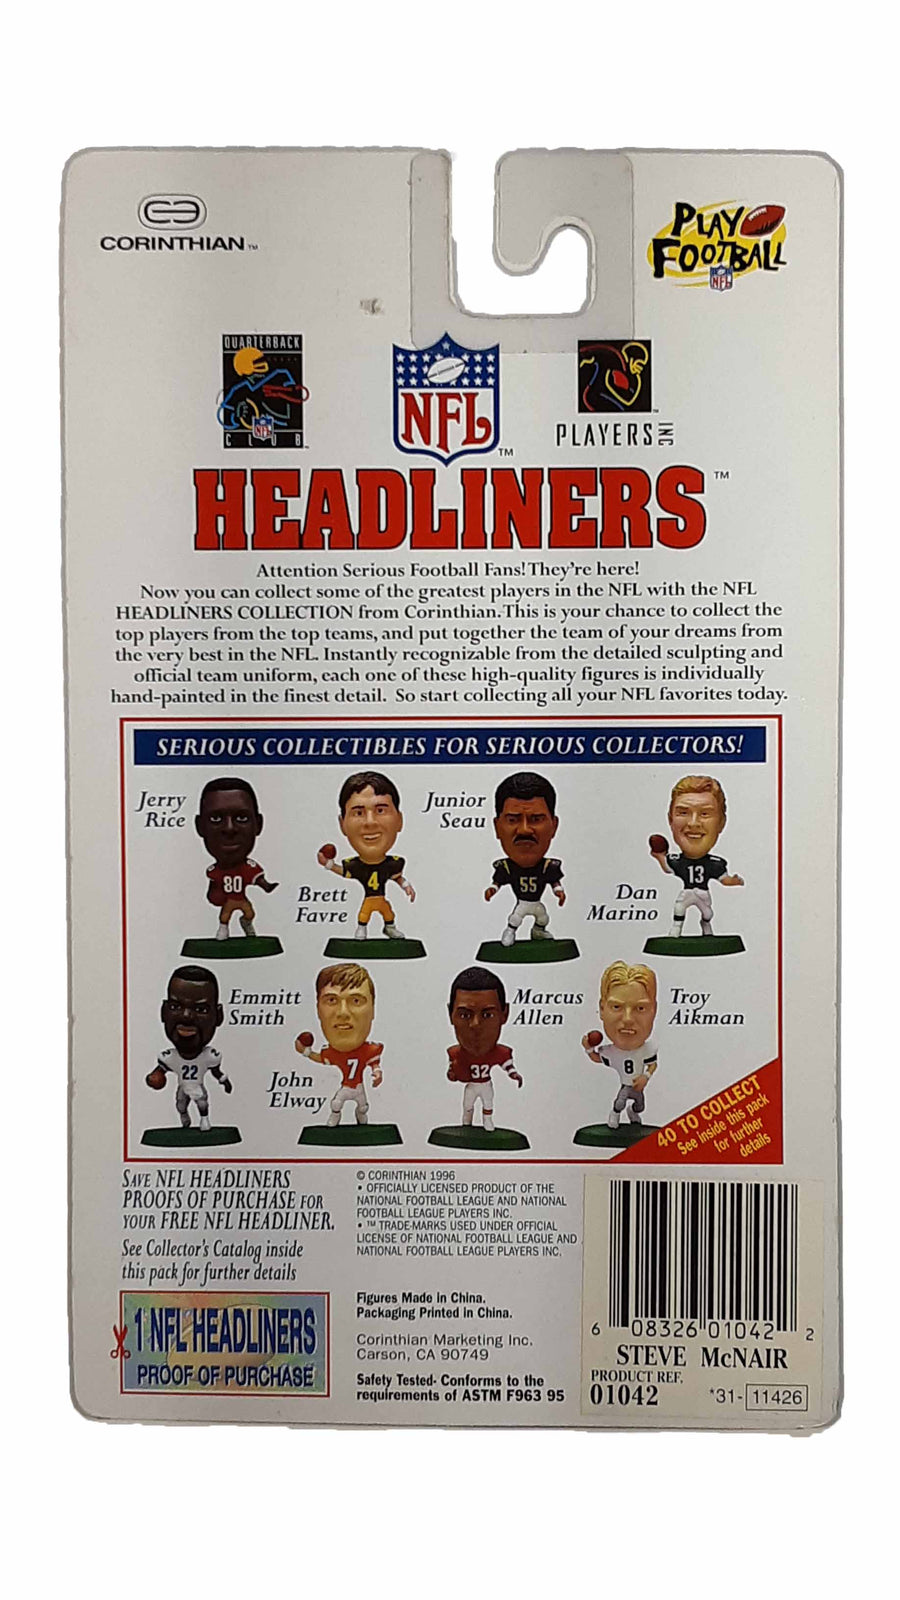 Steve McNair NFL Headliners - MOC action figure